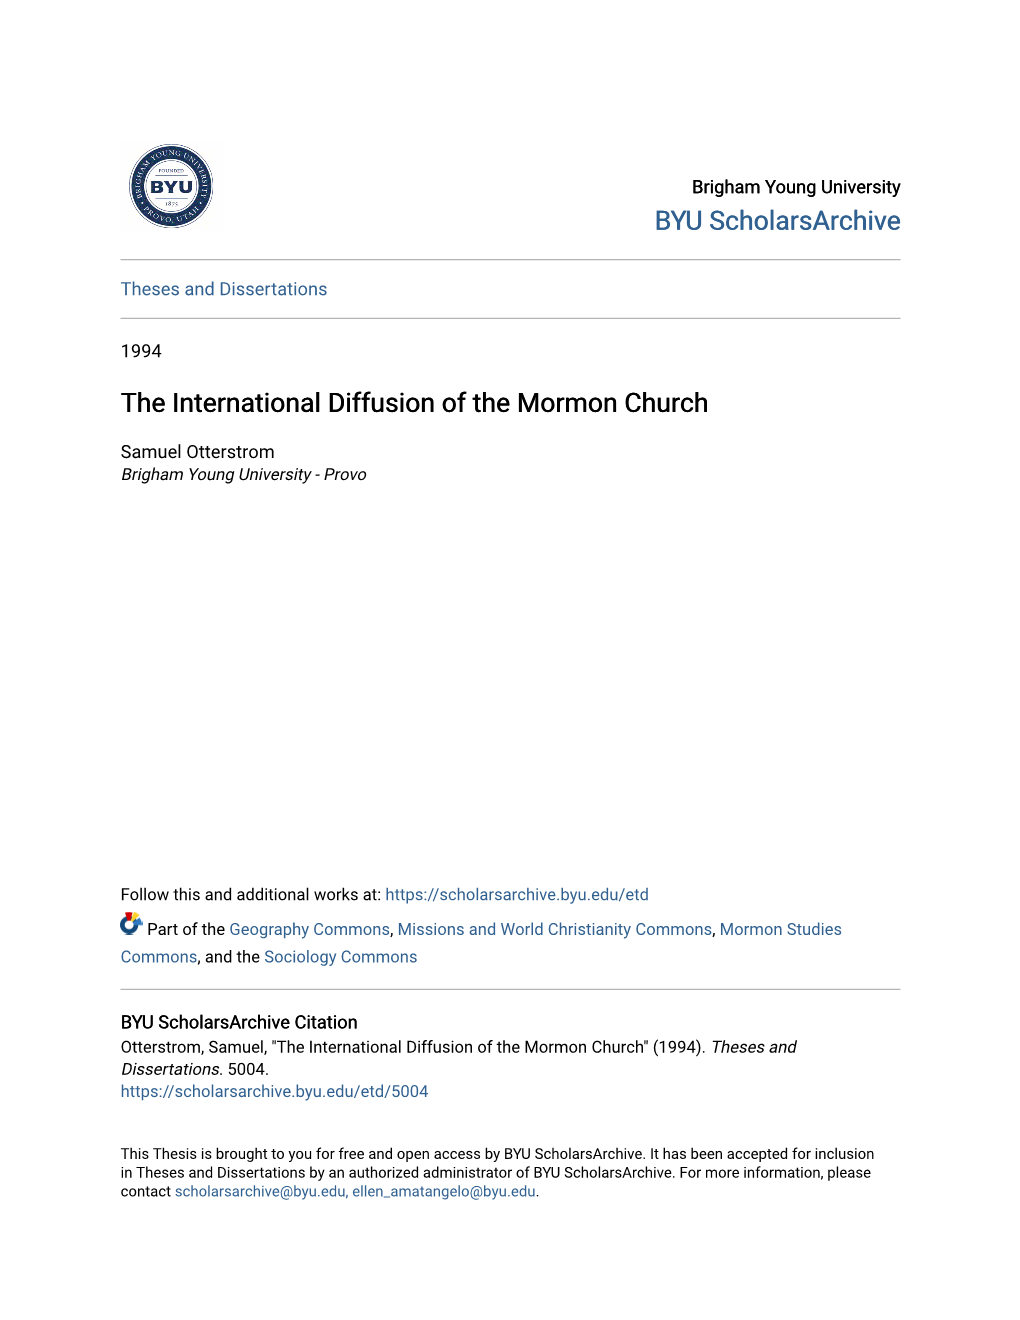 The International Diffusion of the Mormon Church